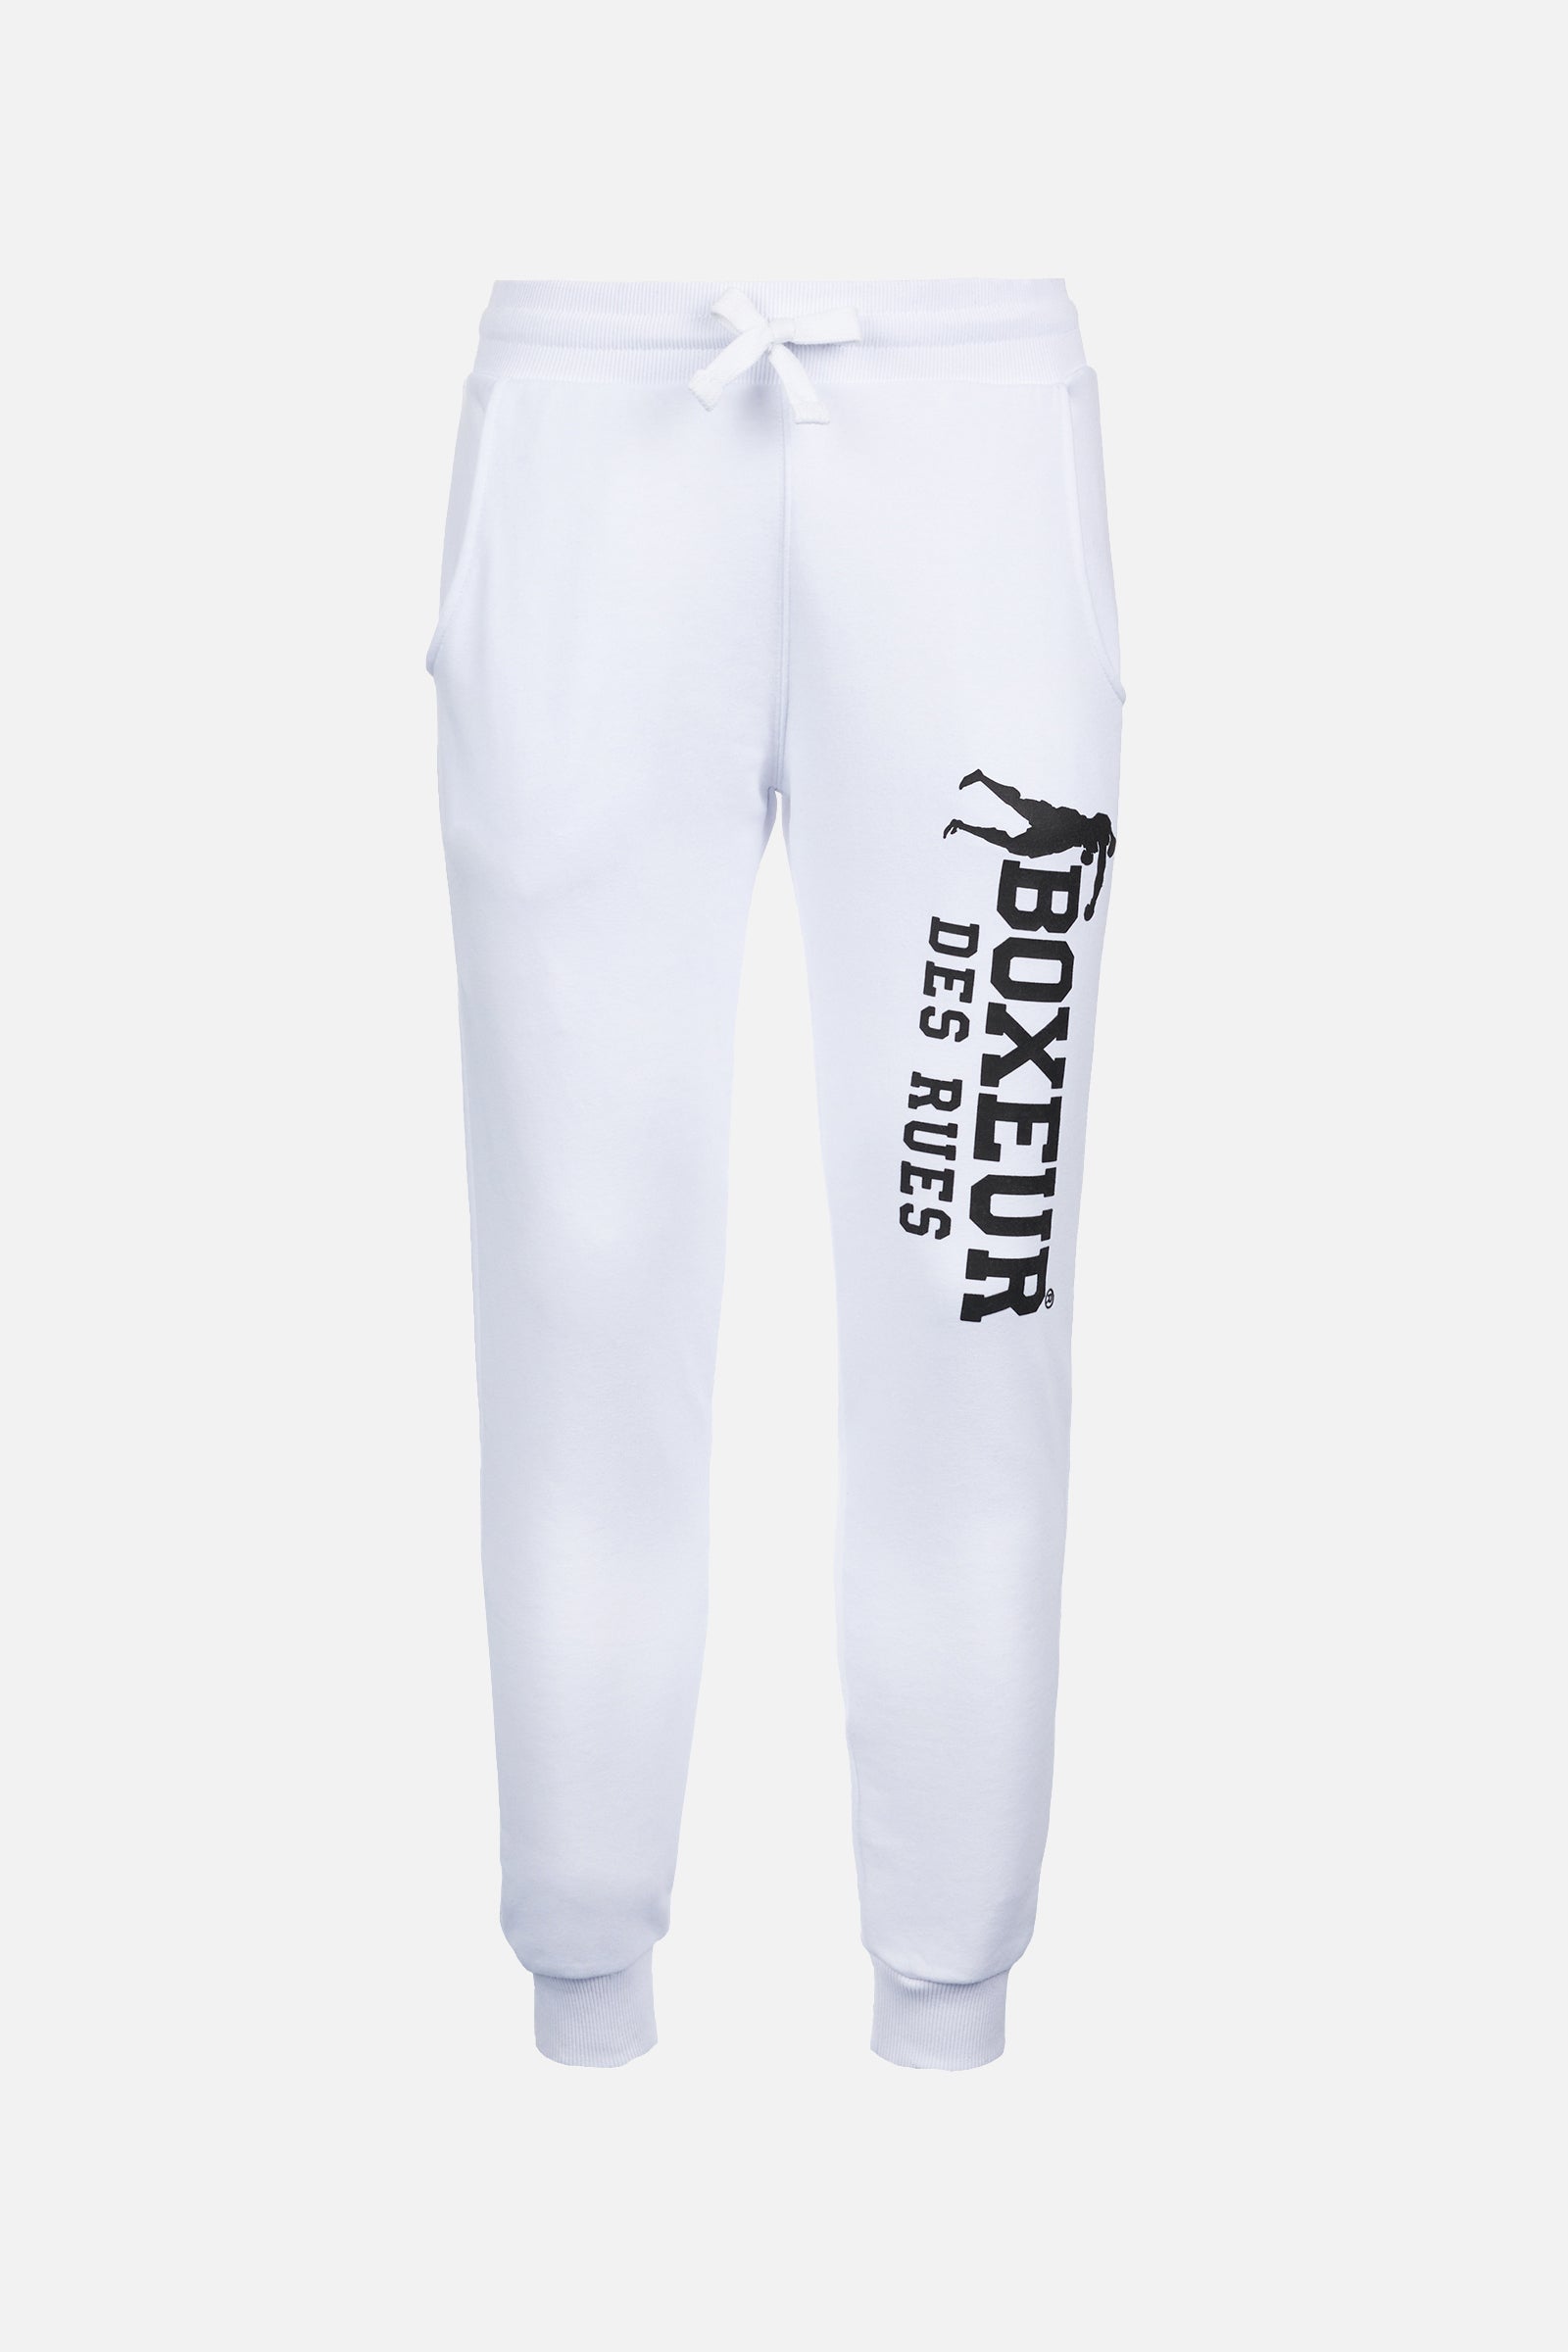 Slim Fit Sweatpant With Logo in White-Black Hosen Boxeur des Rues   